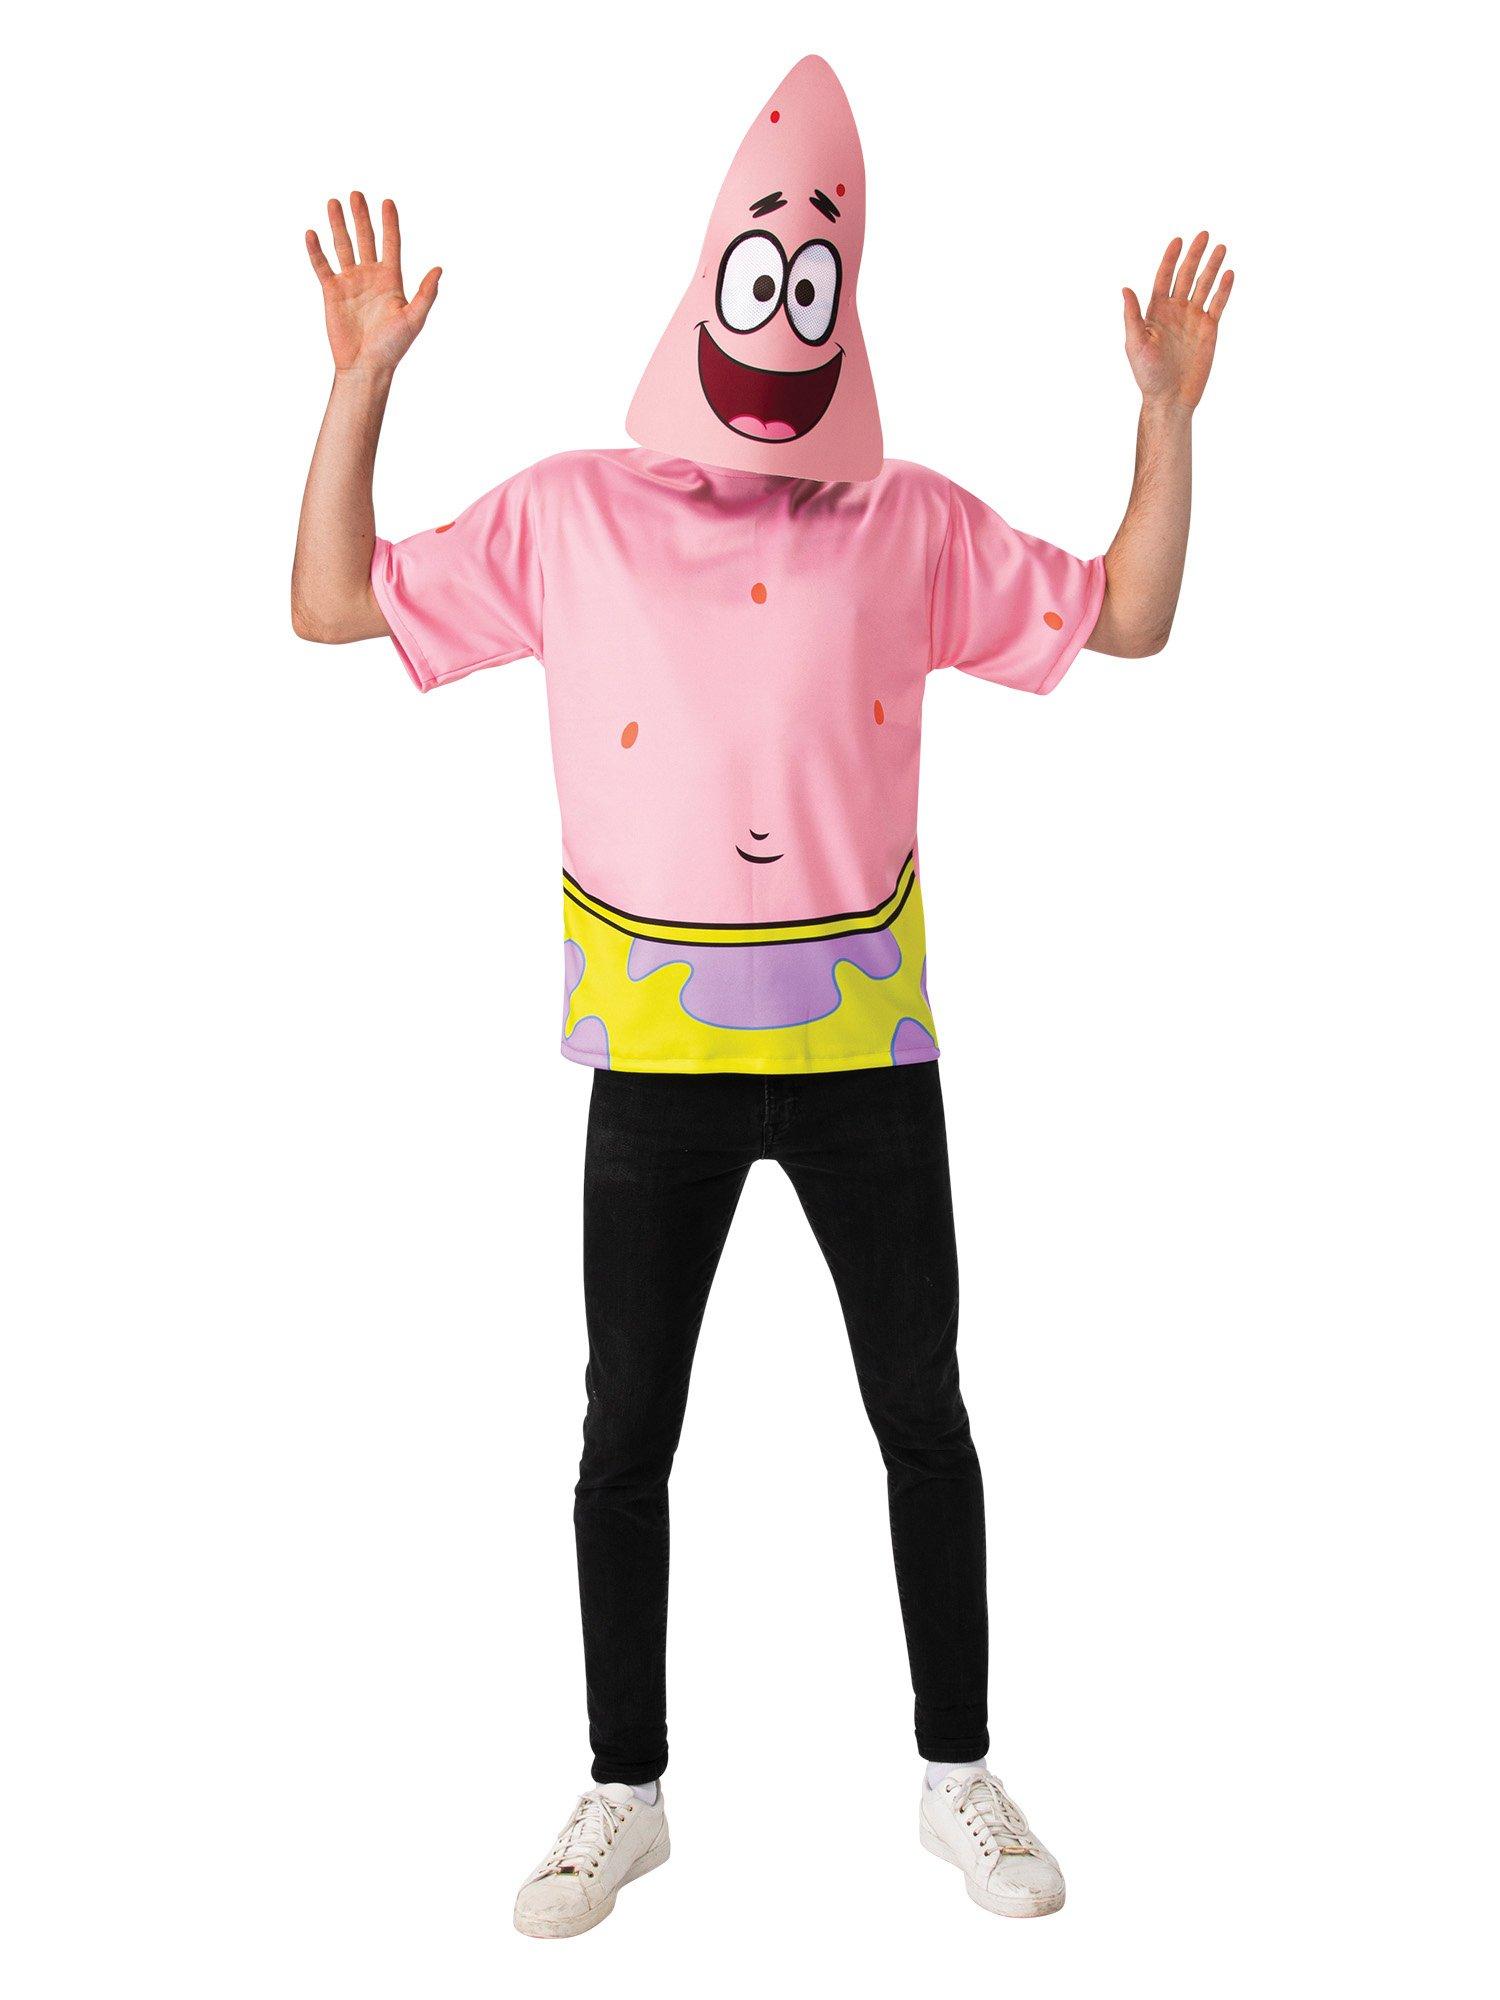 Rubie's Costume Company SpongeBob SquarePants: Patrick Star Adult Costume